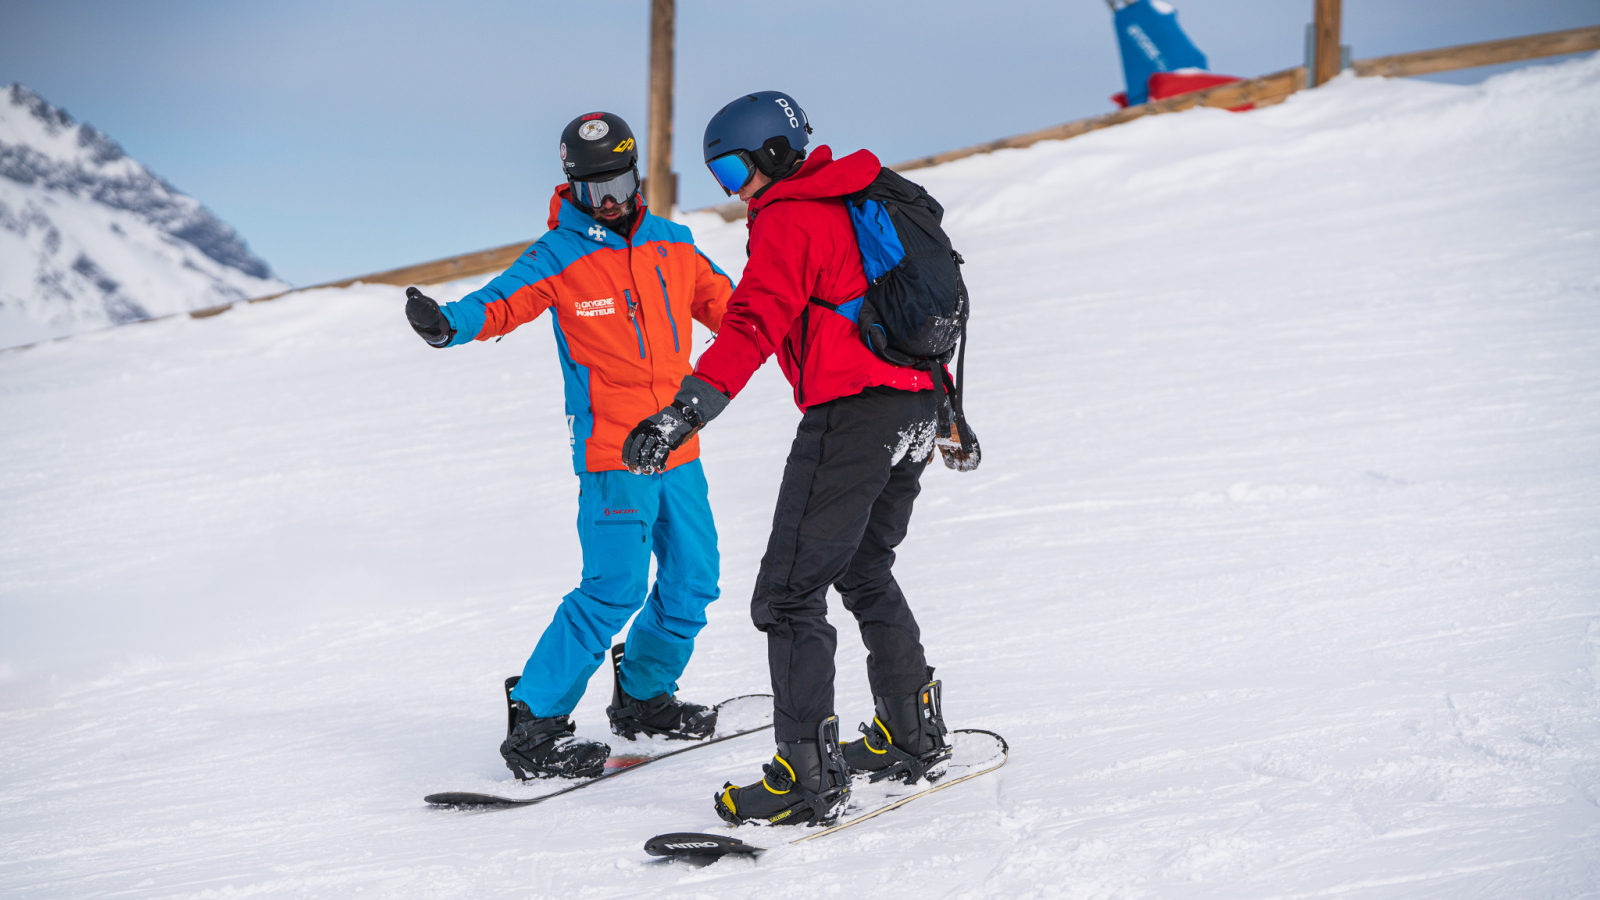 Oxygene snowboard session